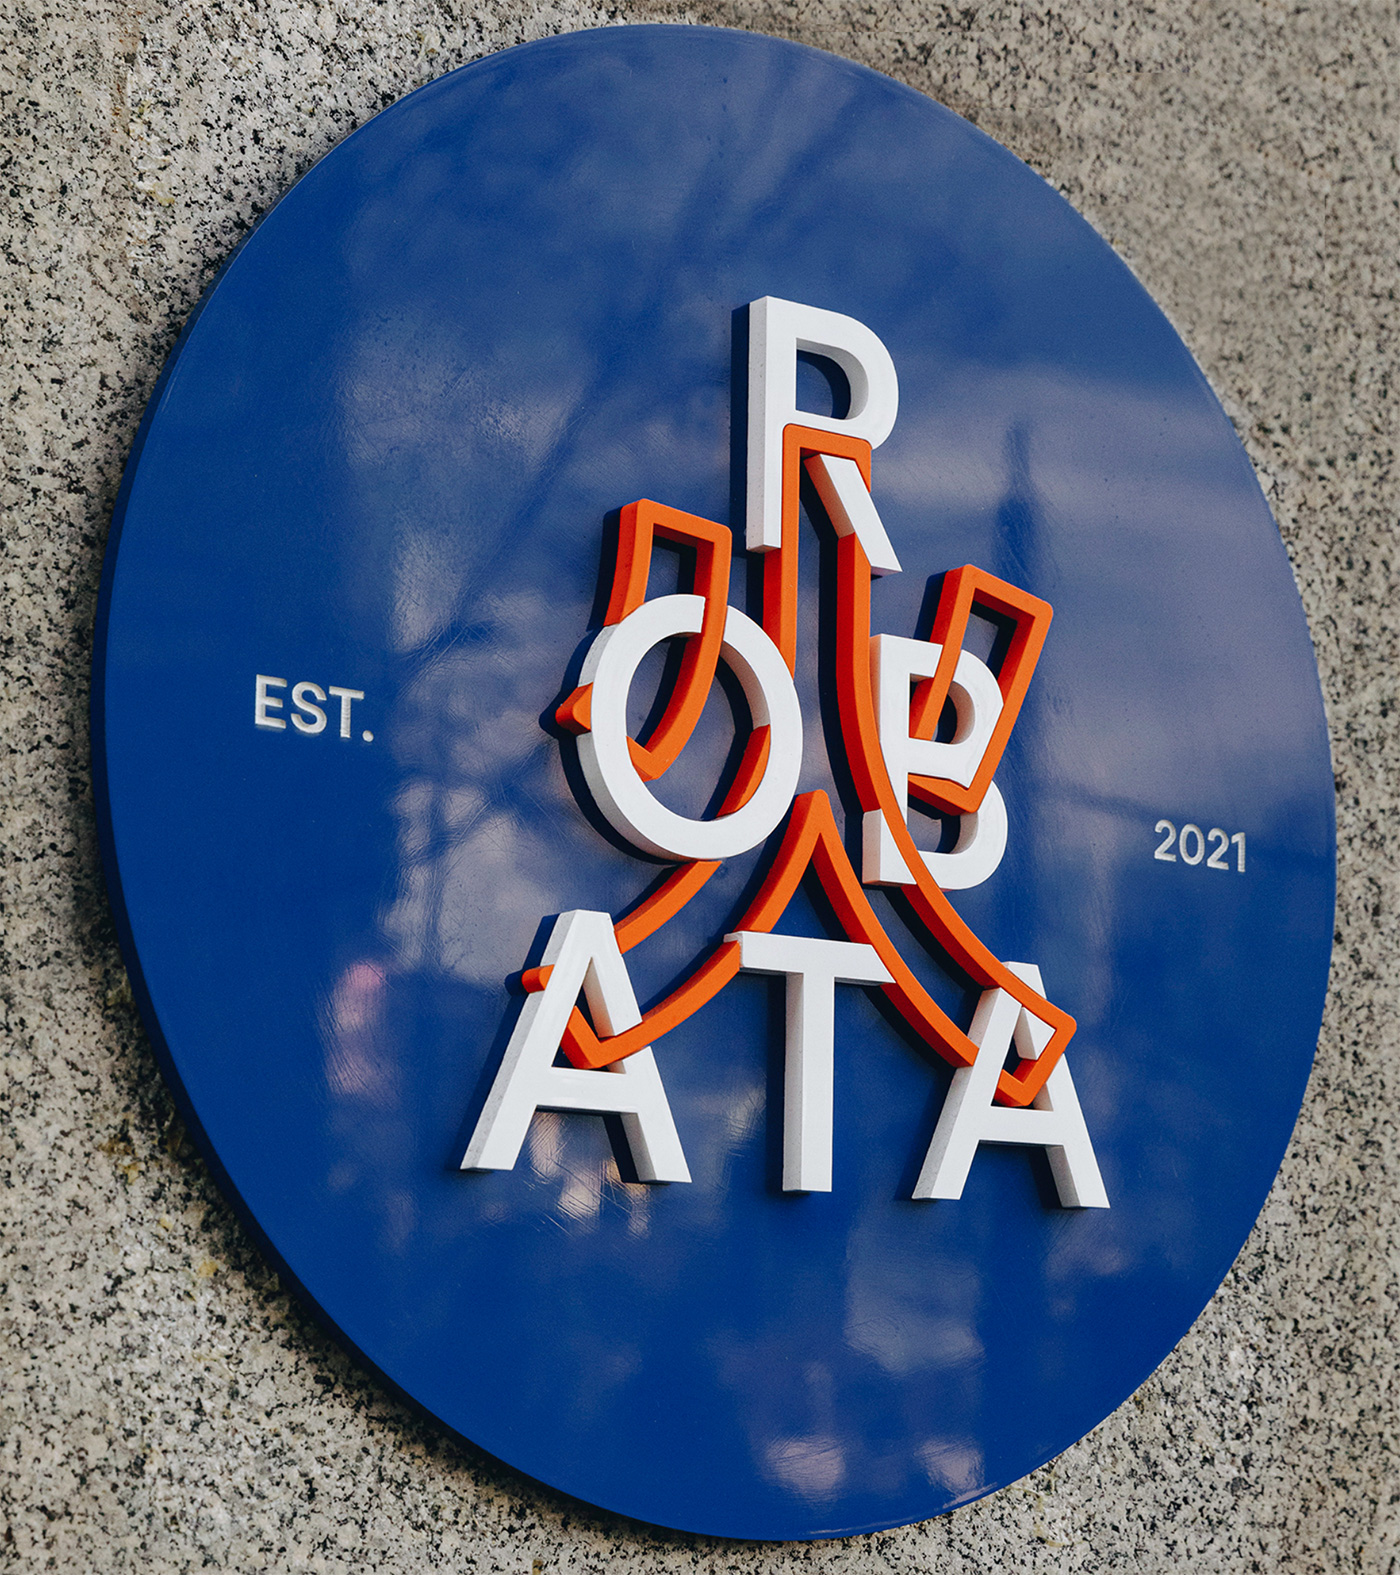 Robata日式餐厅品牌设计